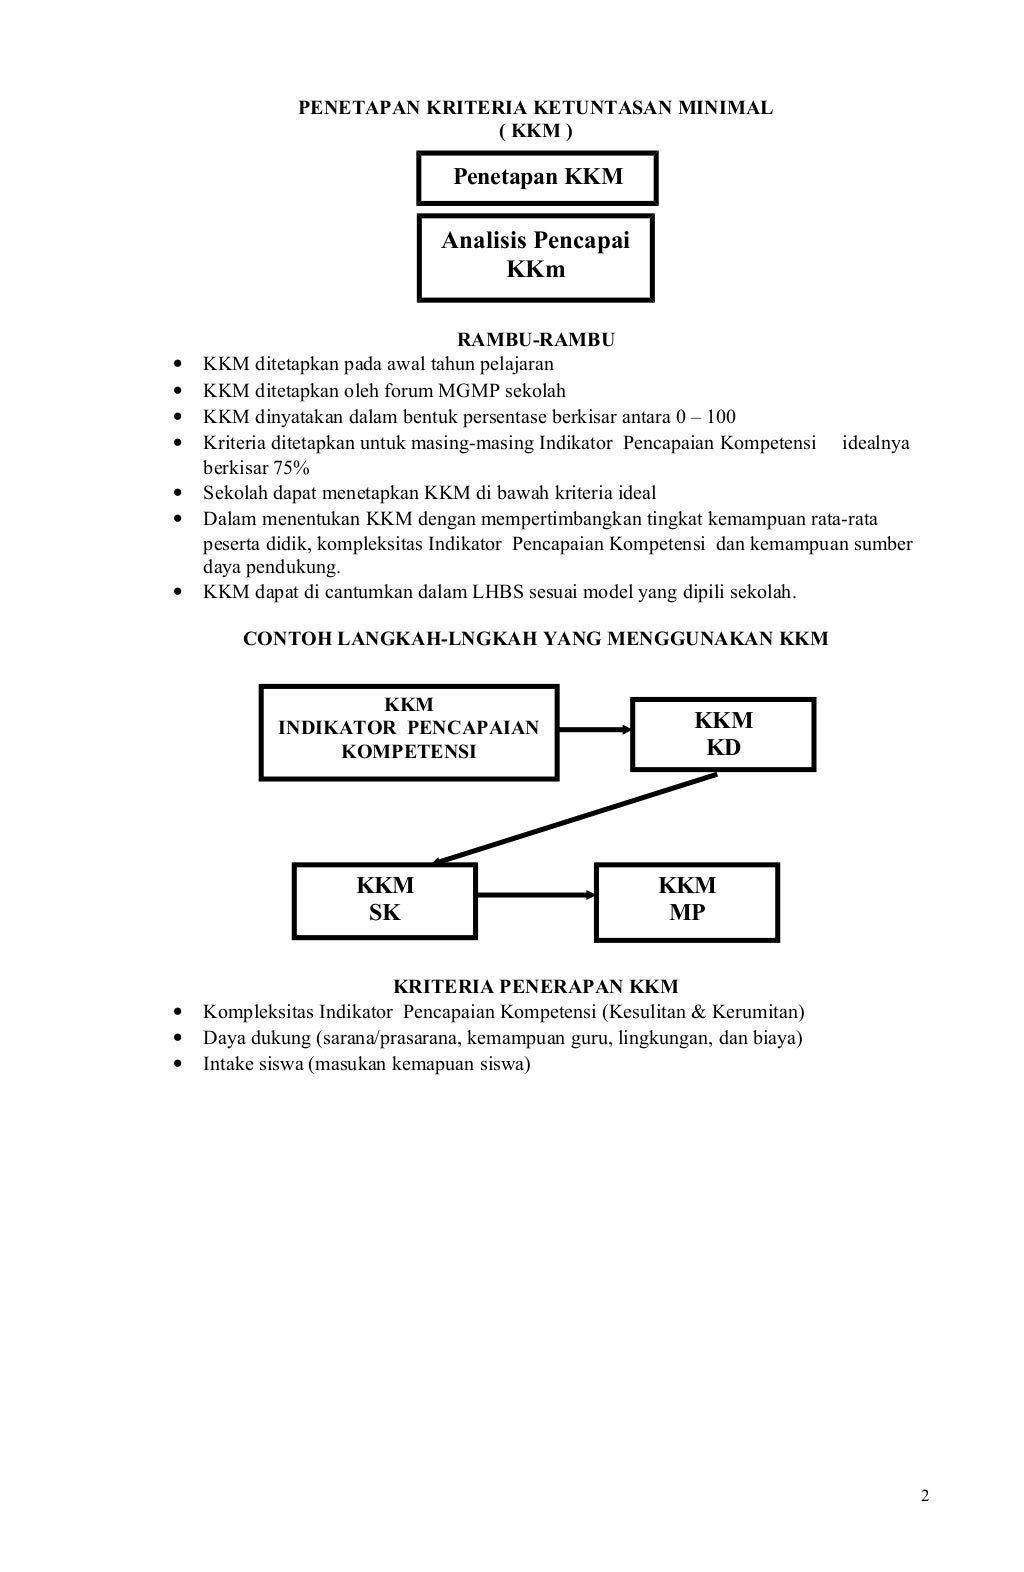 Kkm sk & kd bahasa indonesia kelas vii, viii, ix smp mts semester 1, 2